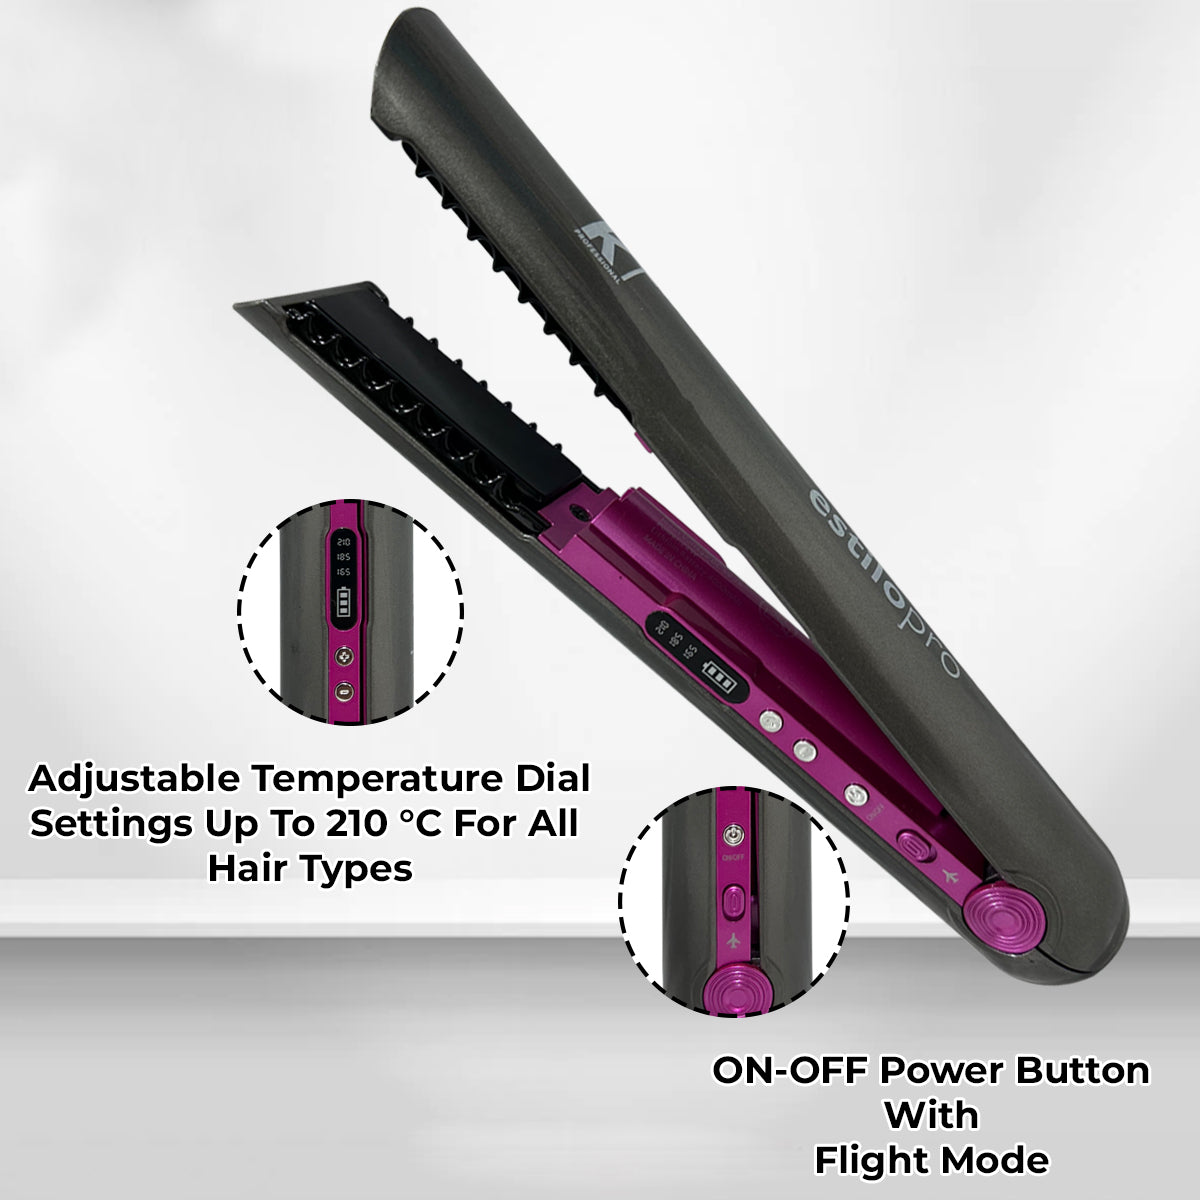 KT Professional Wireless Portable Hair Straightener